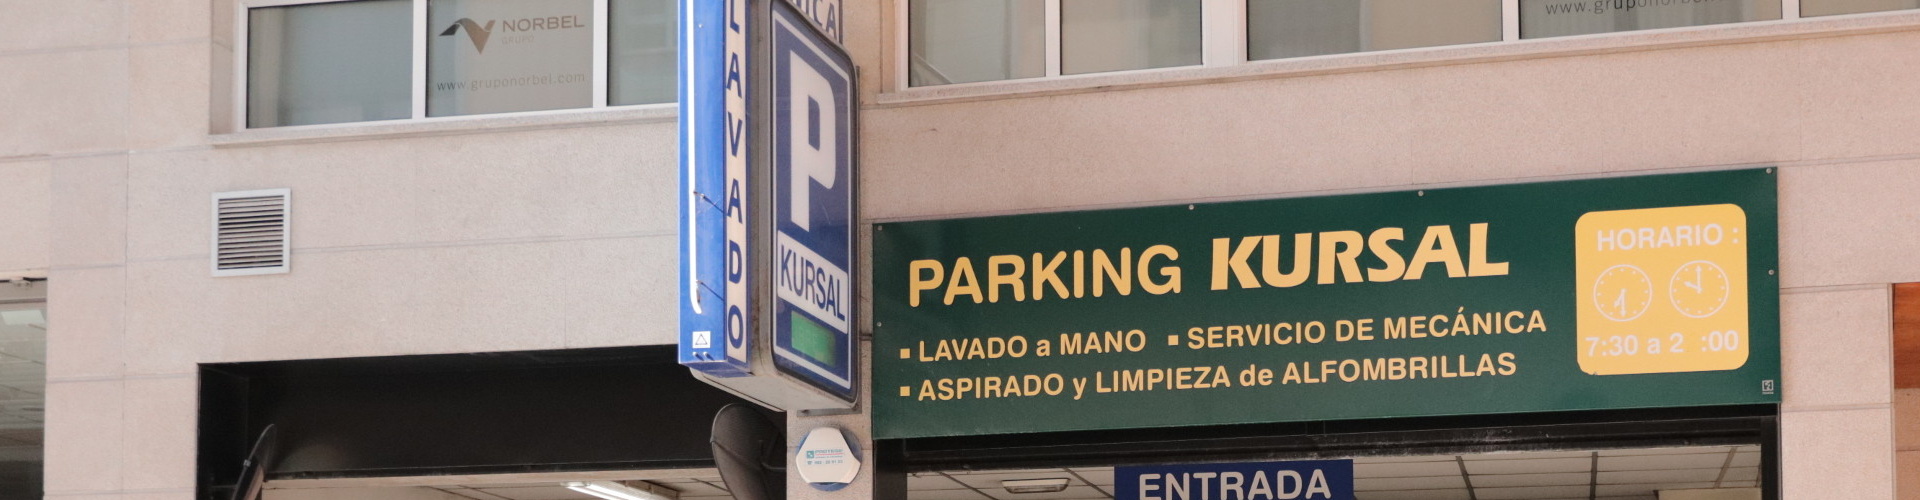 cabecera parking kursal en Lugo biriska empresa ética